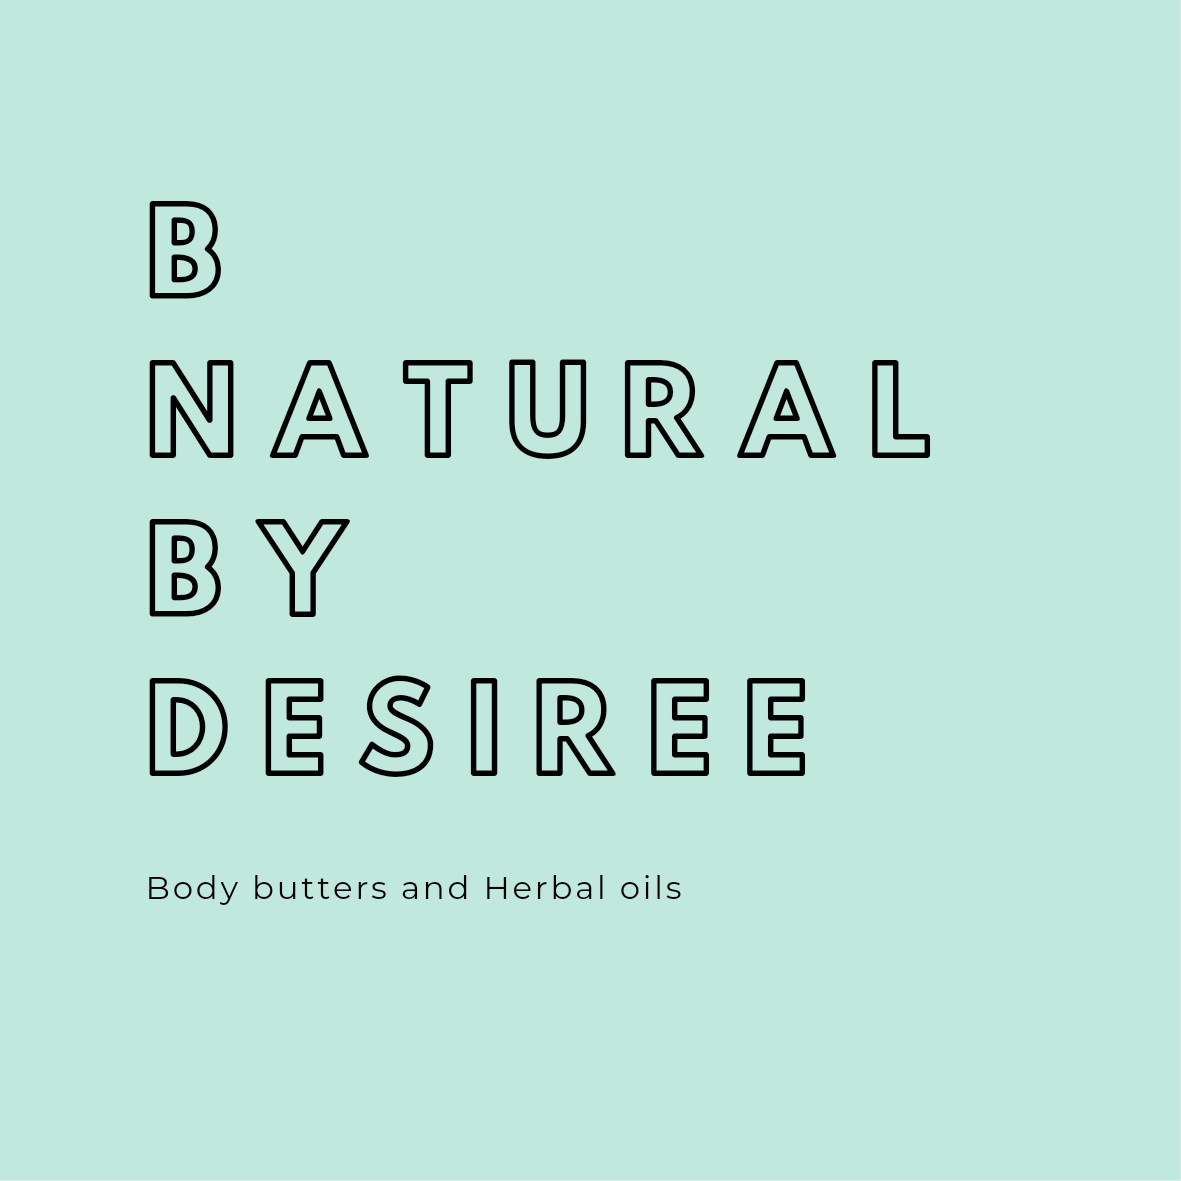 B Natural by Desiree